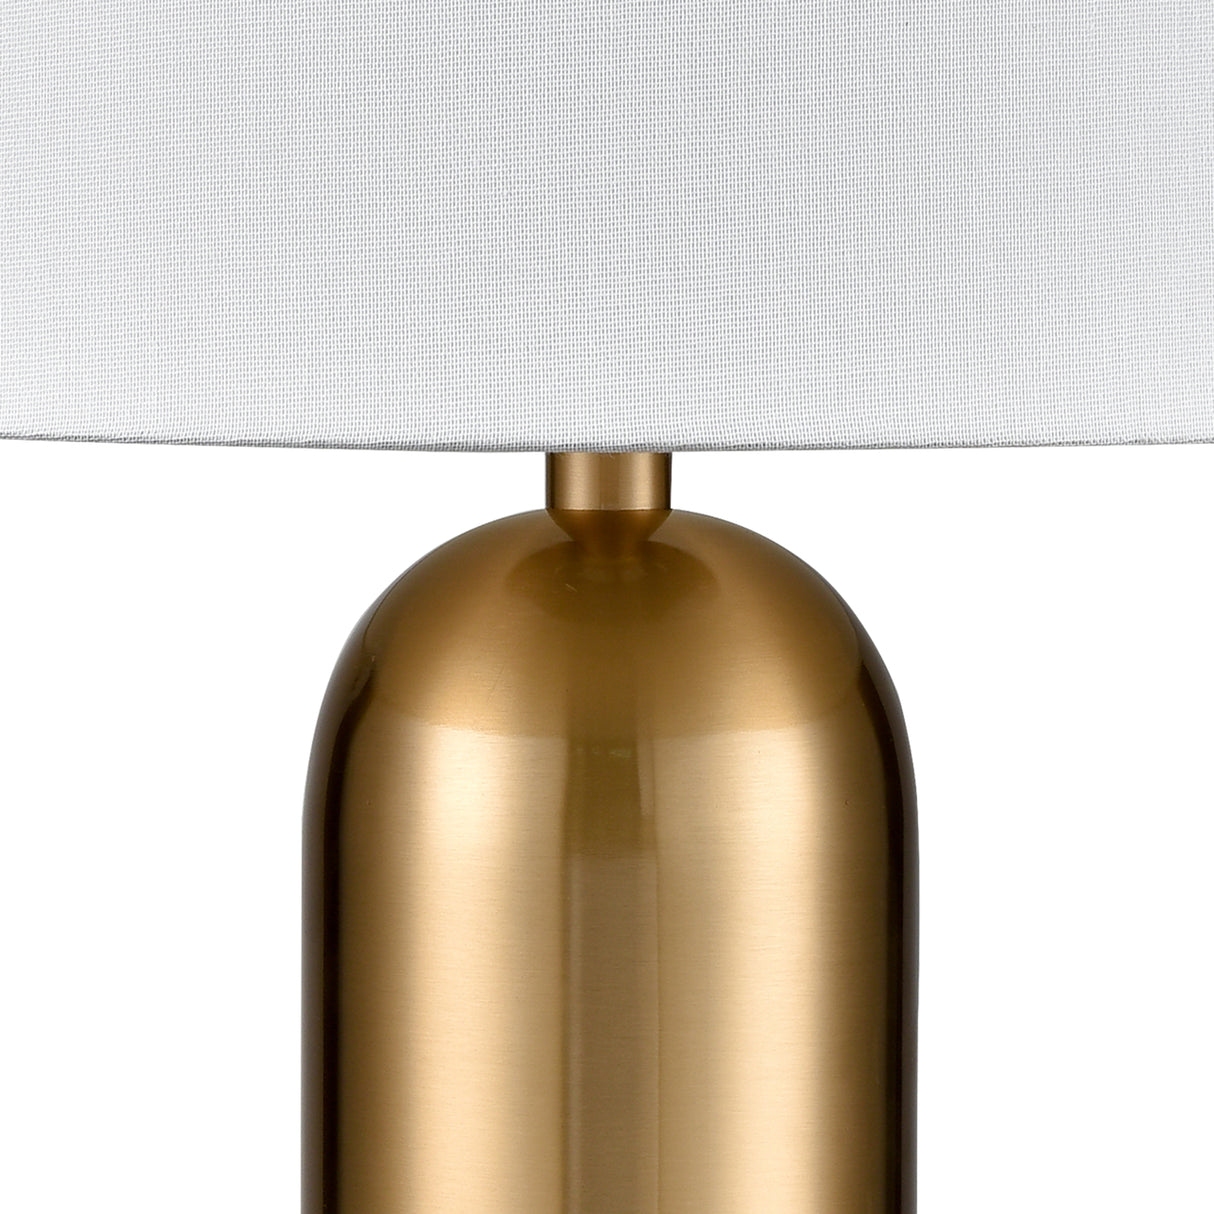 Elk H0019-9574 Elishaw 30'' High 1-Light Table Lamp - Aged Brass